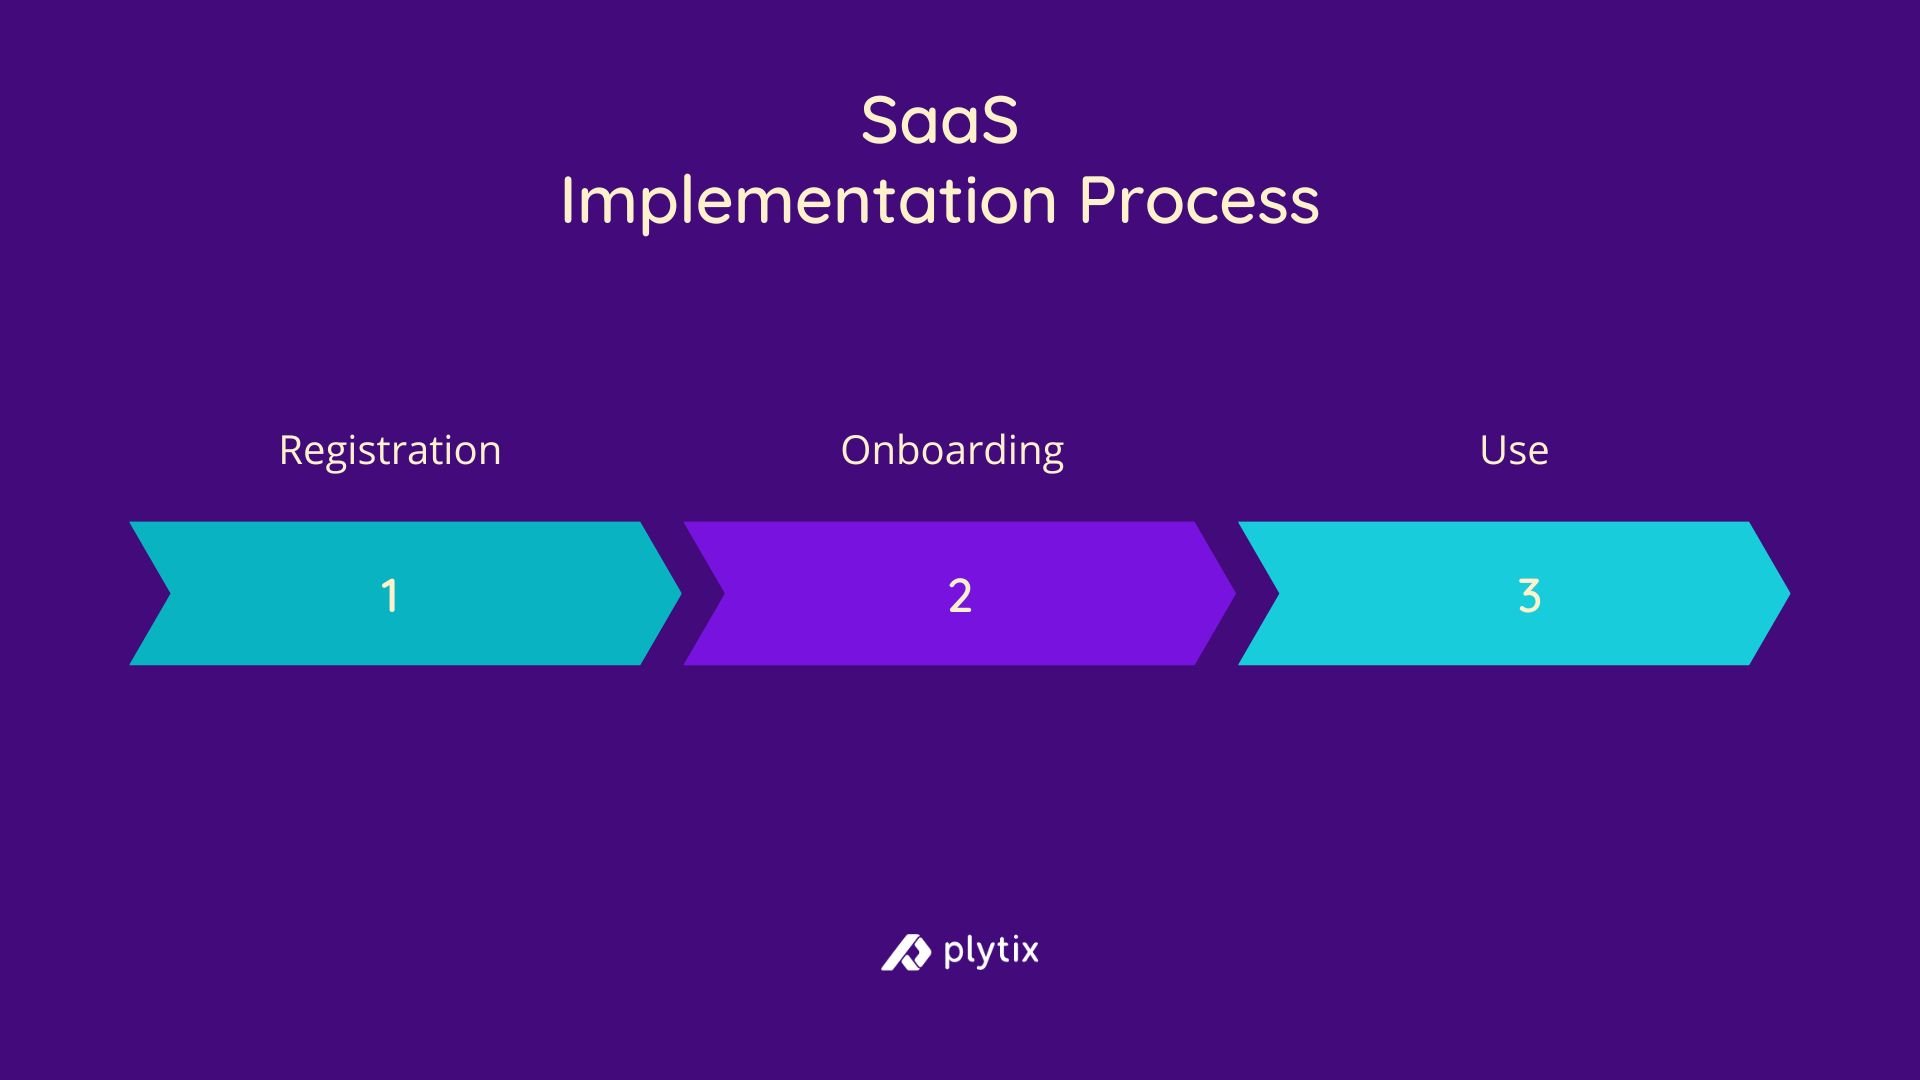 SaaS Implementation Process in 3 steps